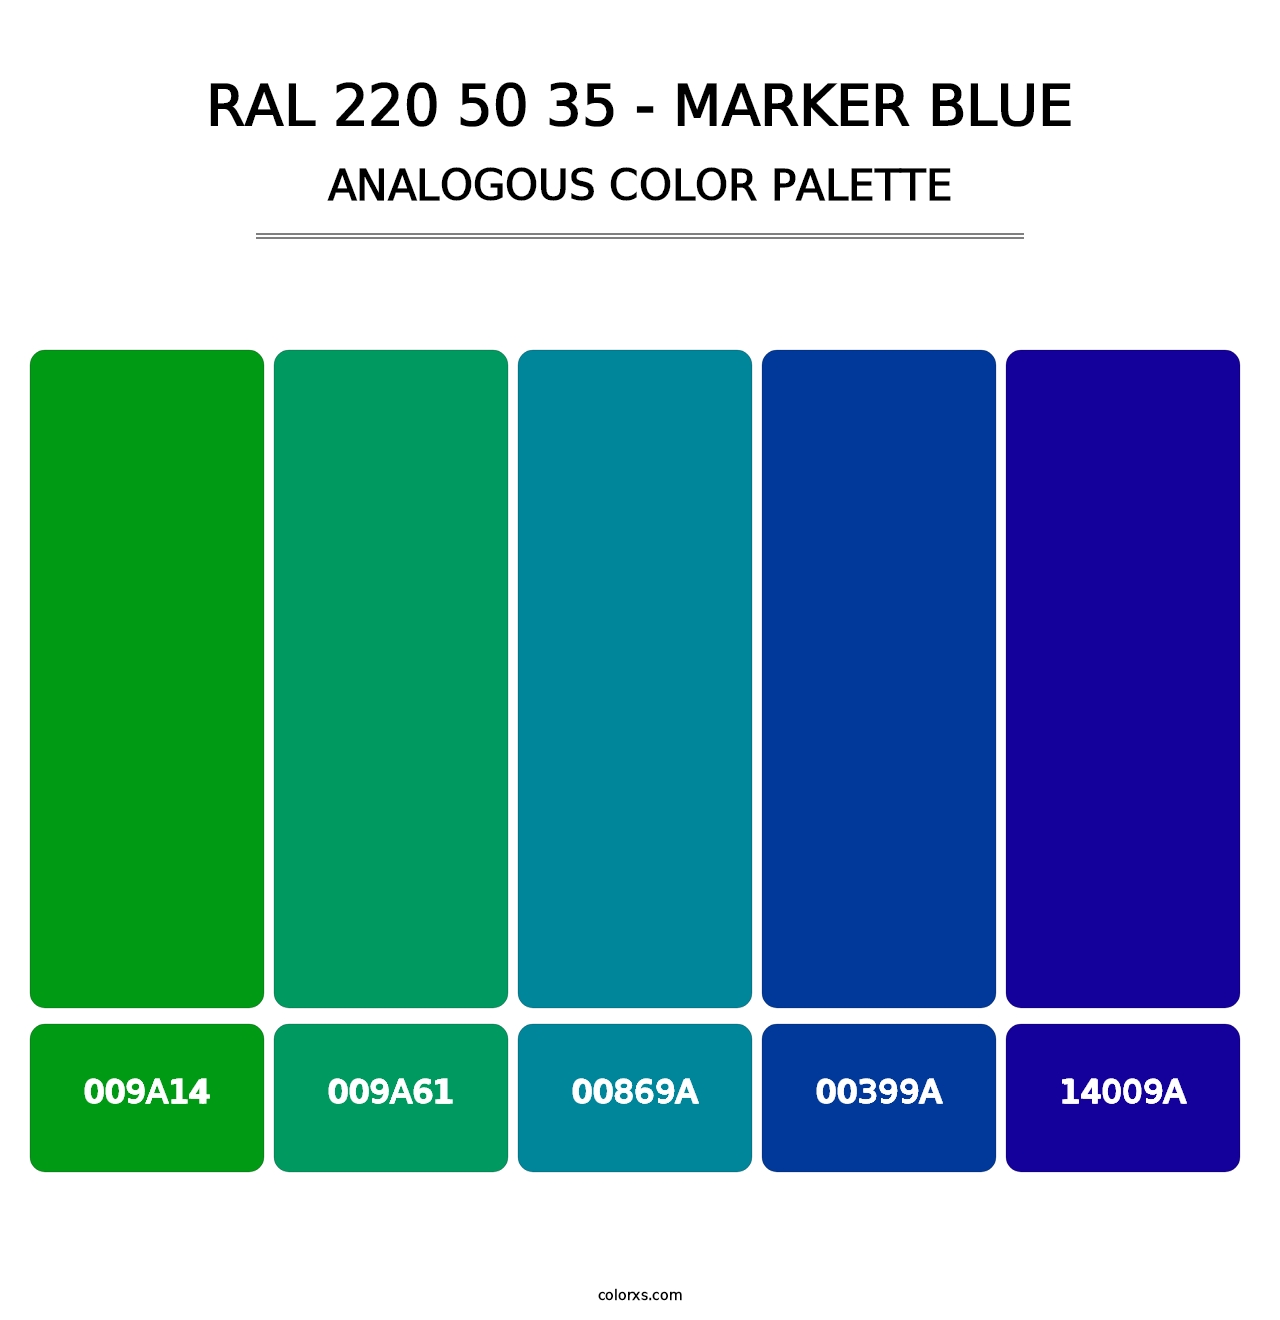 RAL 220 50 35 - Marker Blue - Analogous Color Palette